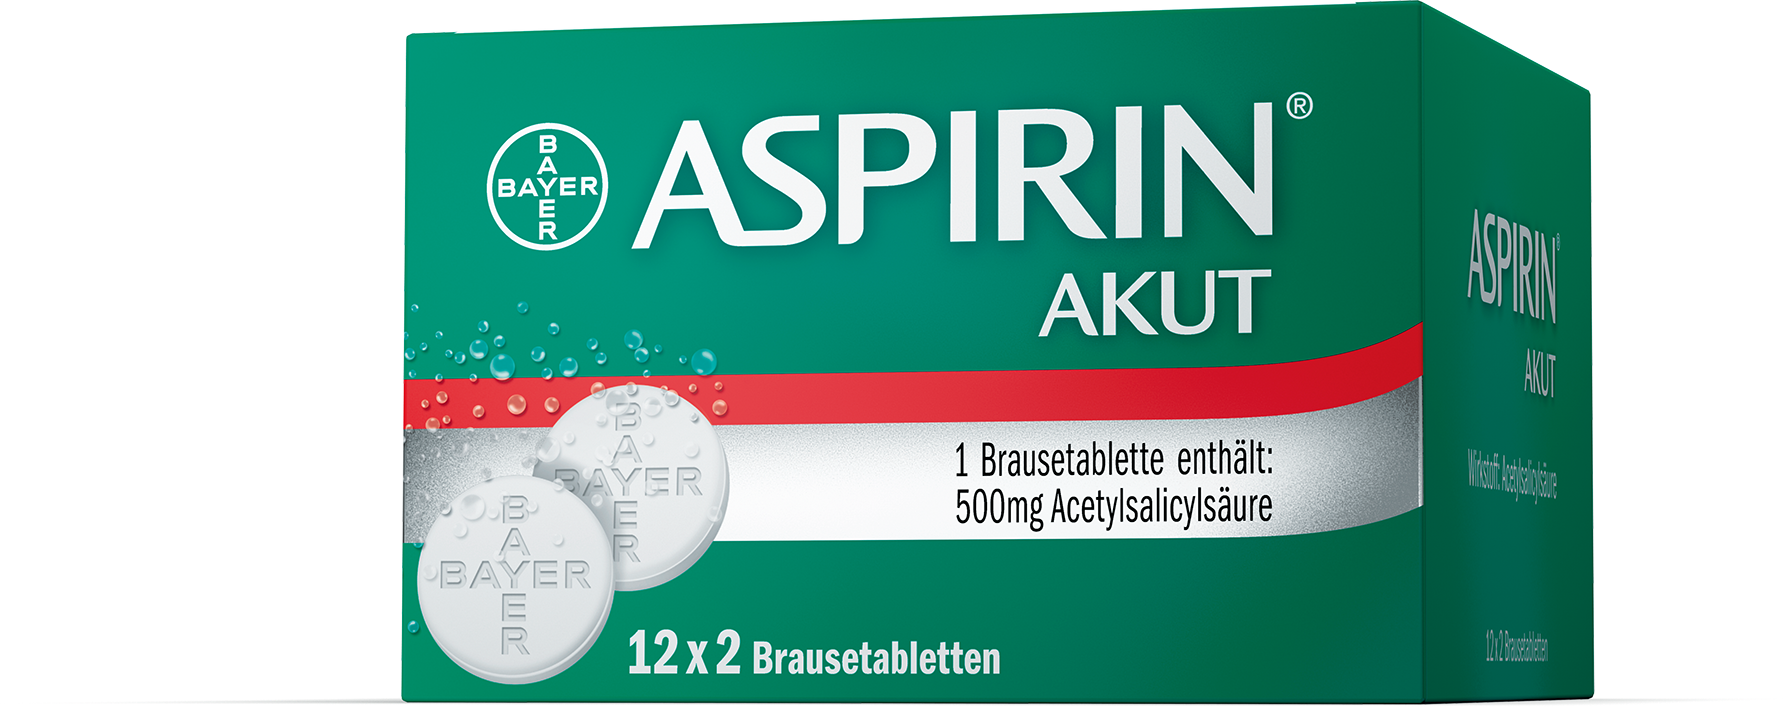 Aspirin® Akut - Brausetabletten